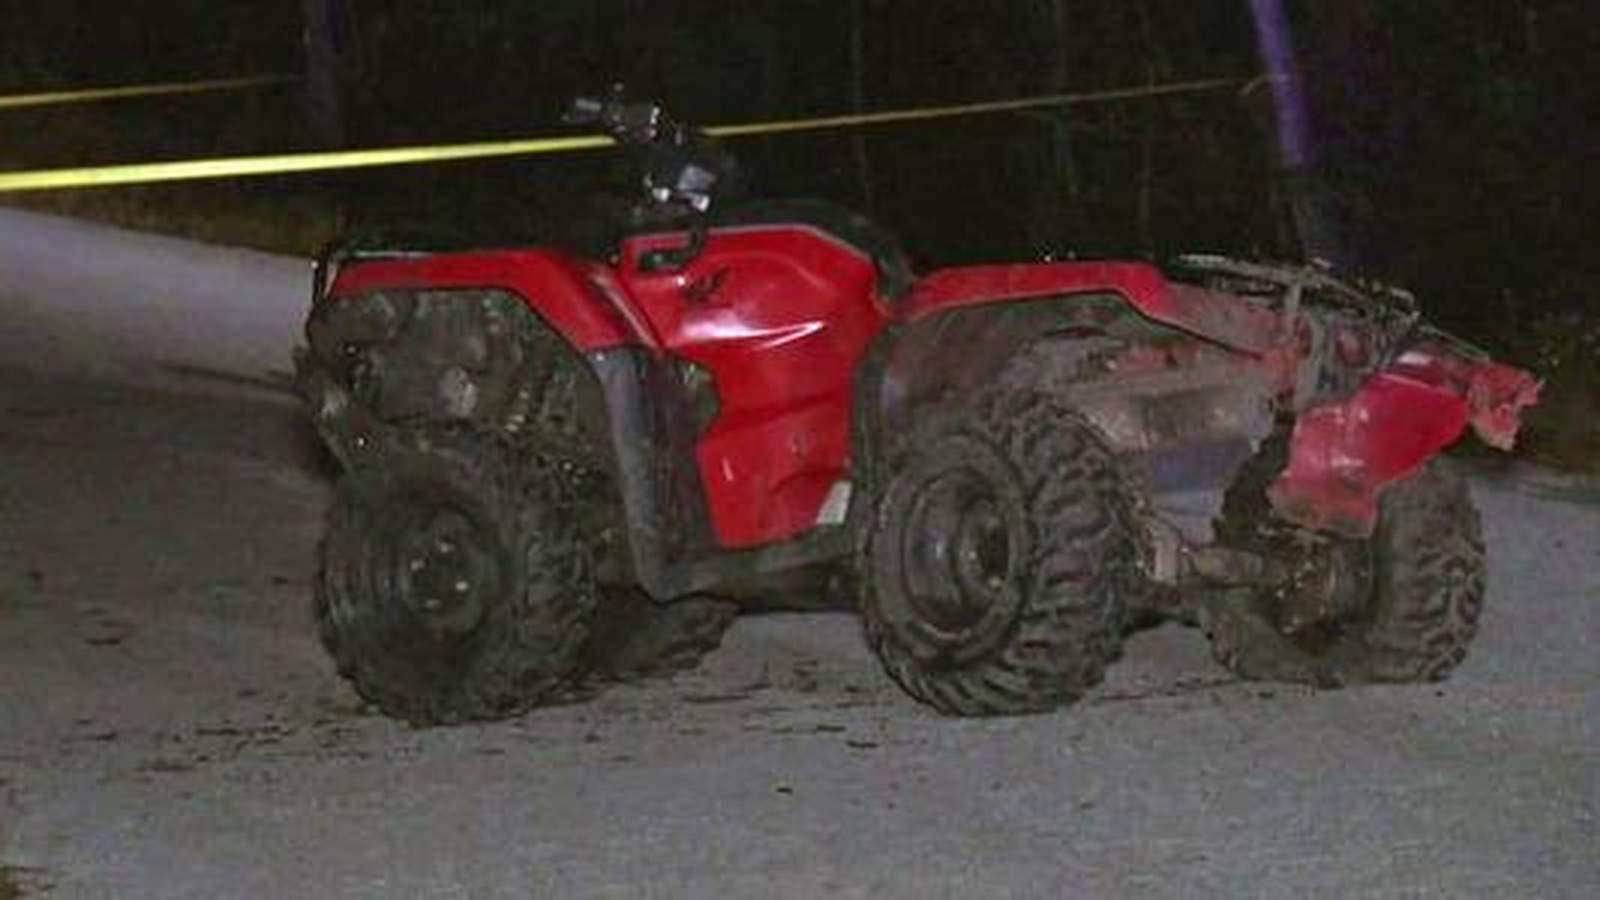 Teen killed, 2 others injured in ATV crash